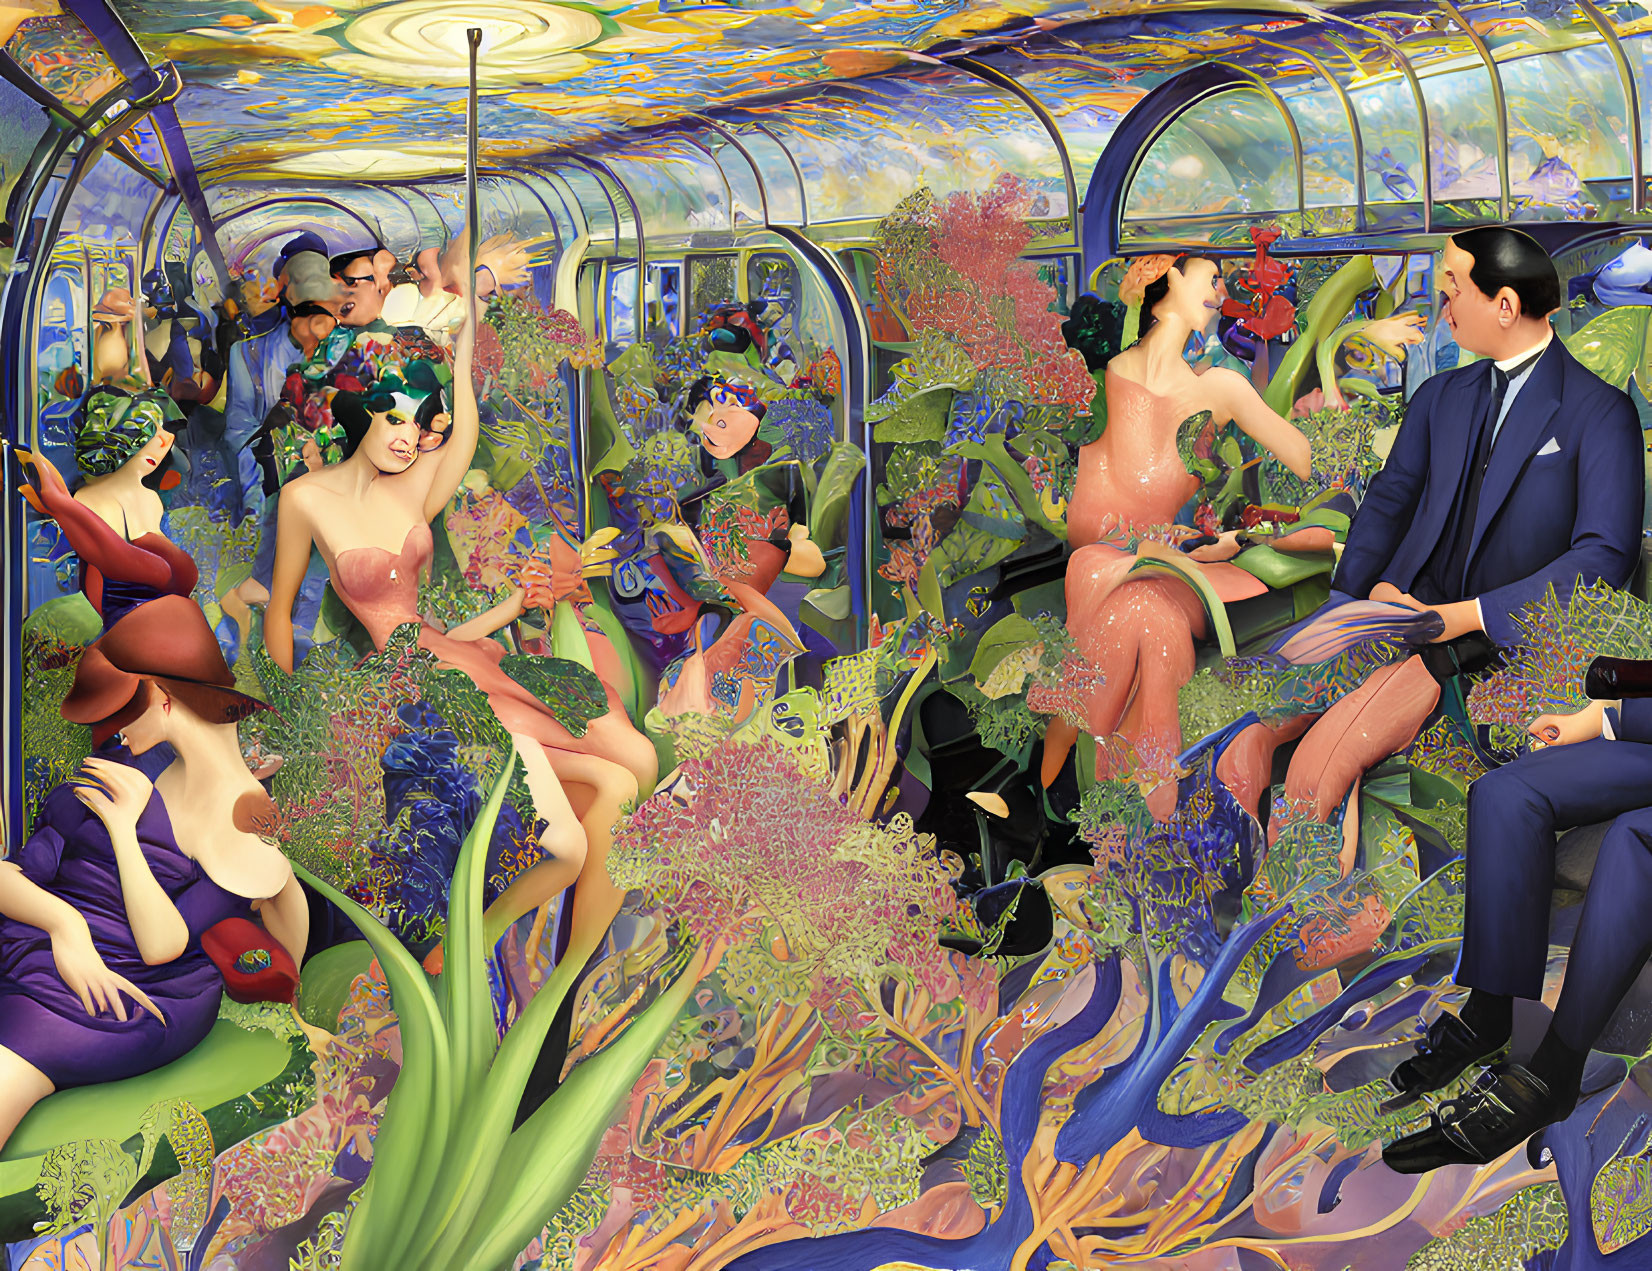 Colorful illustration of plant-themed subway scene